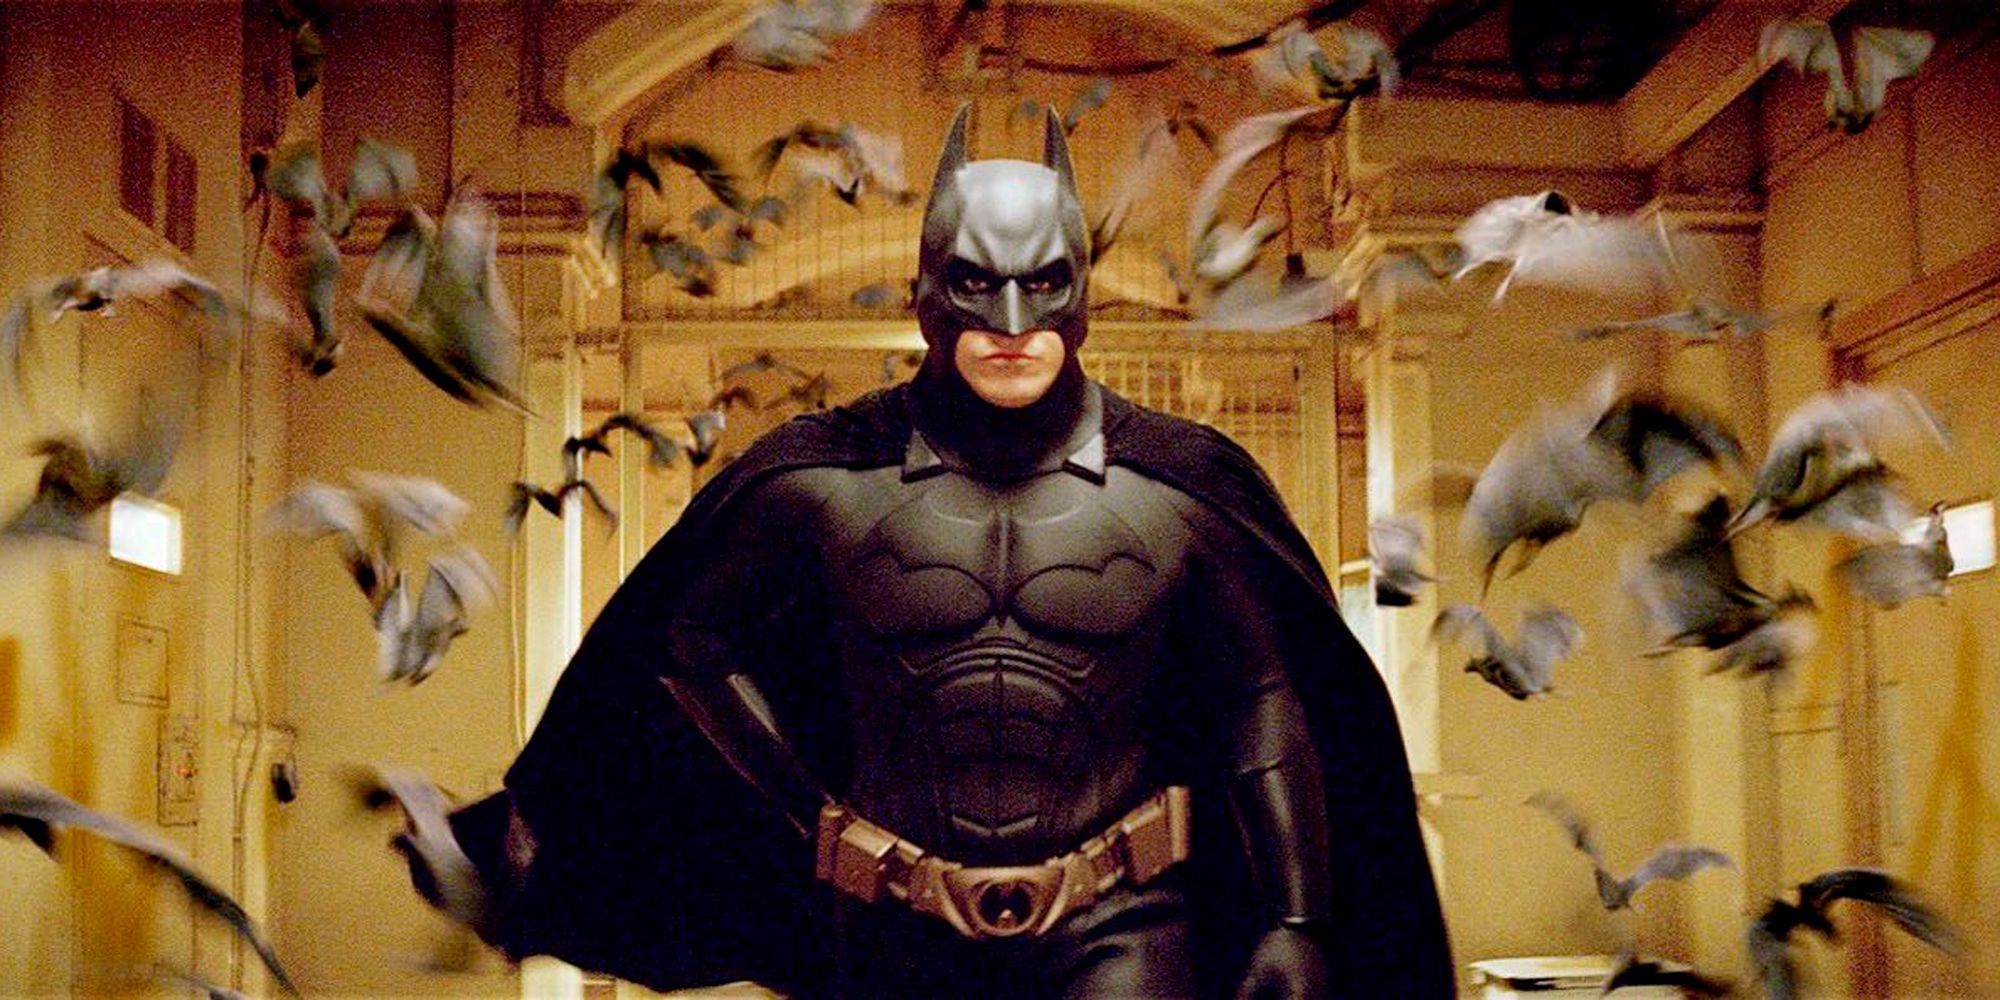 Christian Bale's Batman running through a hallway with a swarm of bats in Batman Begins